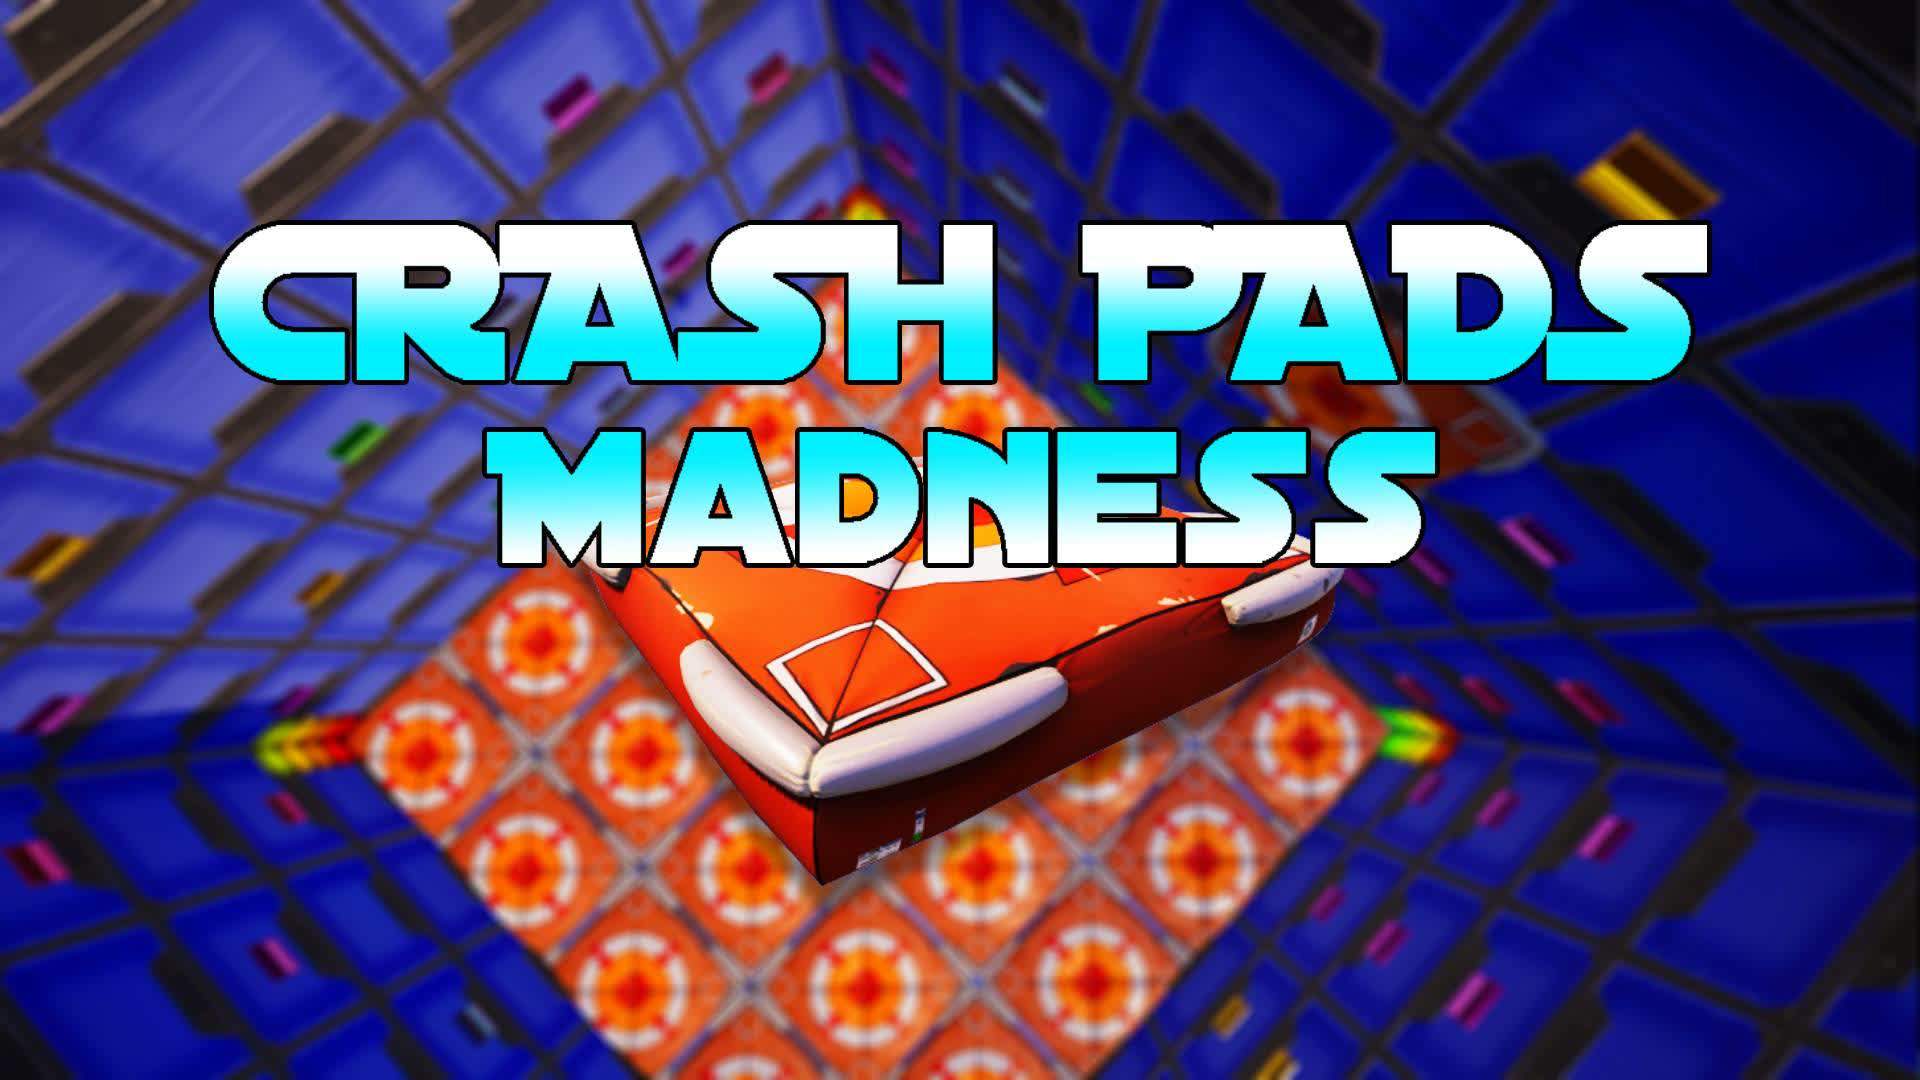 Crash Pads Madness